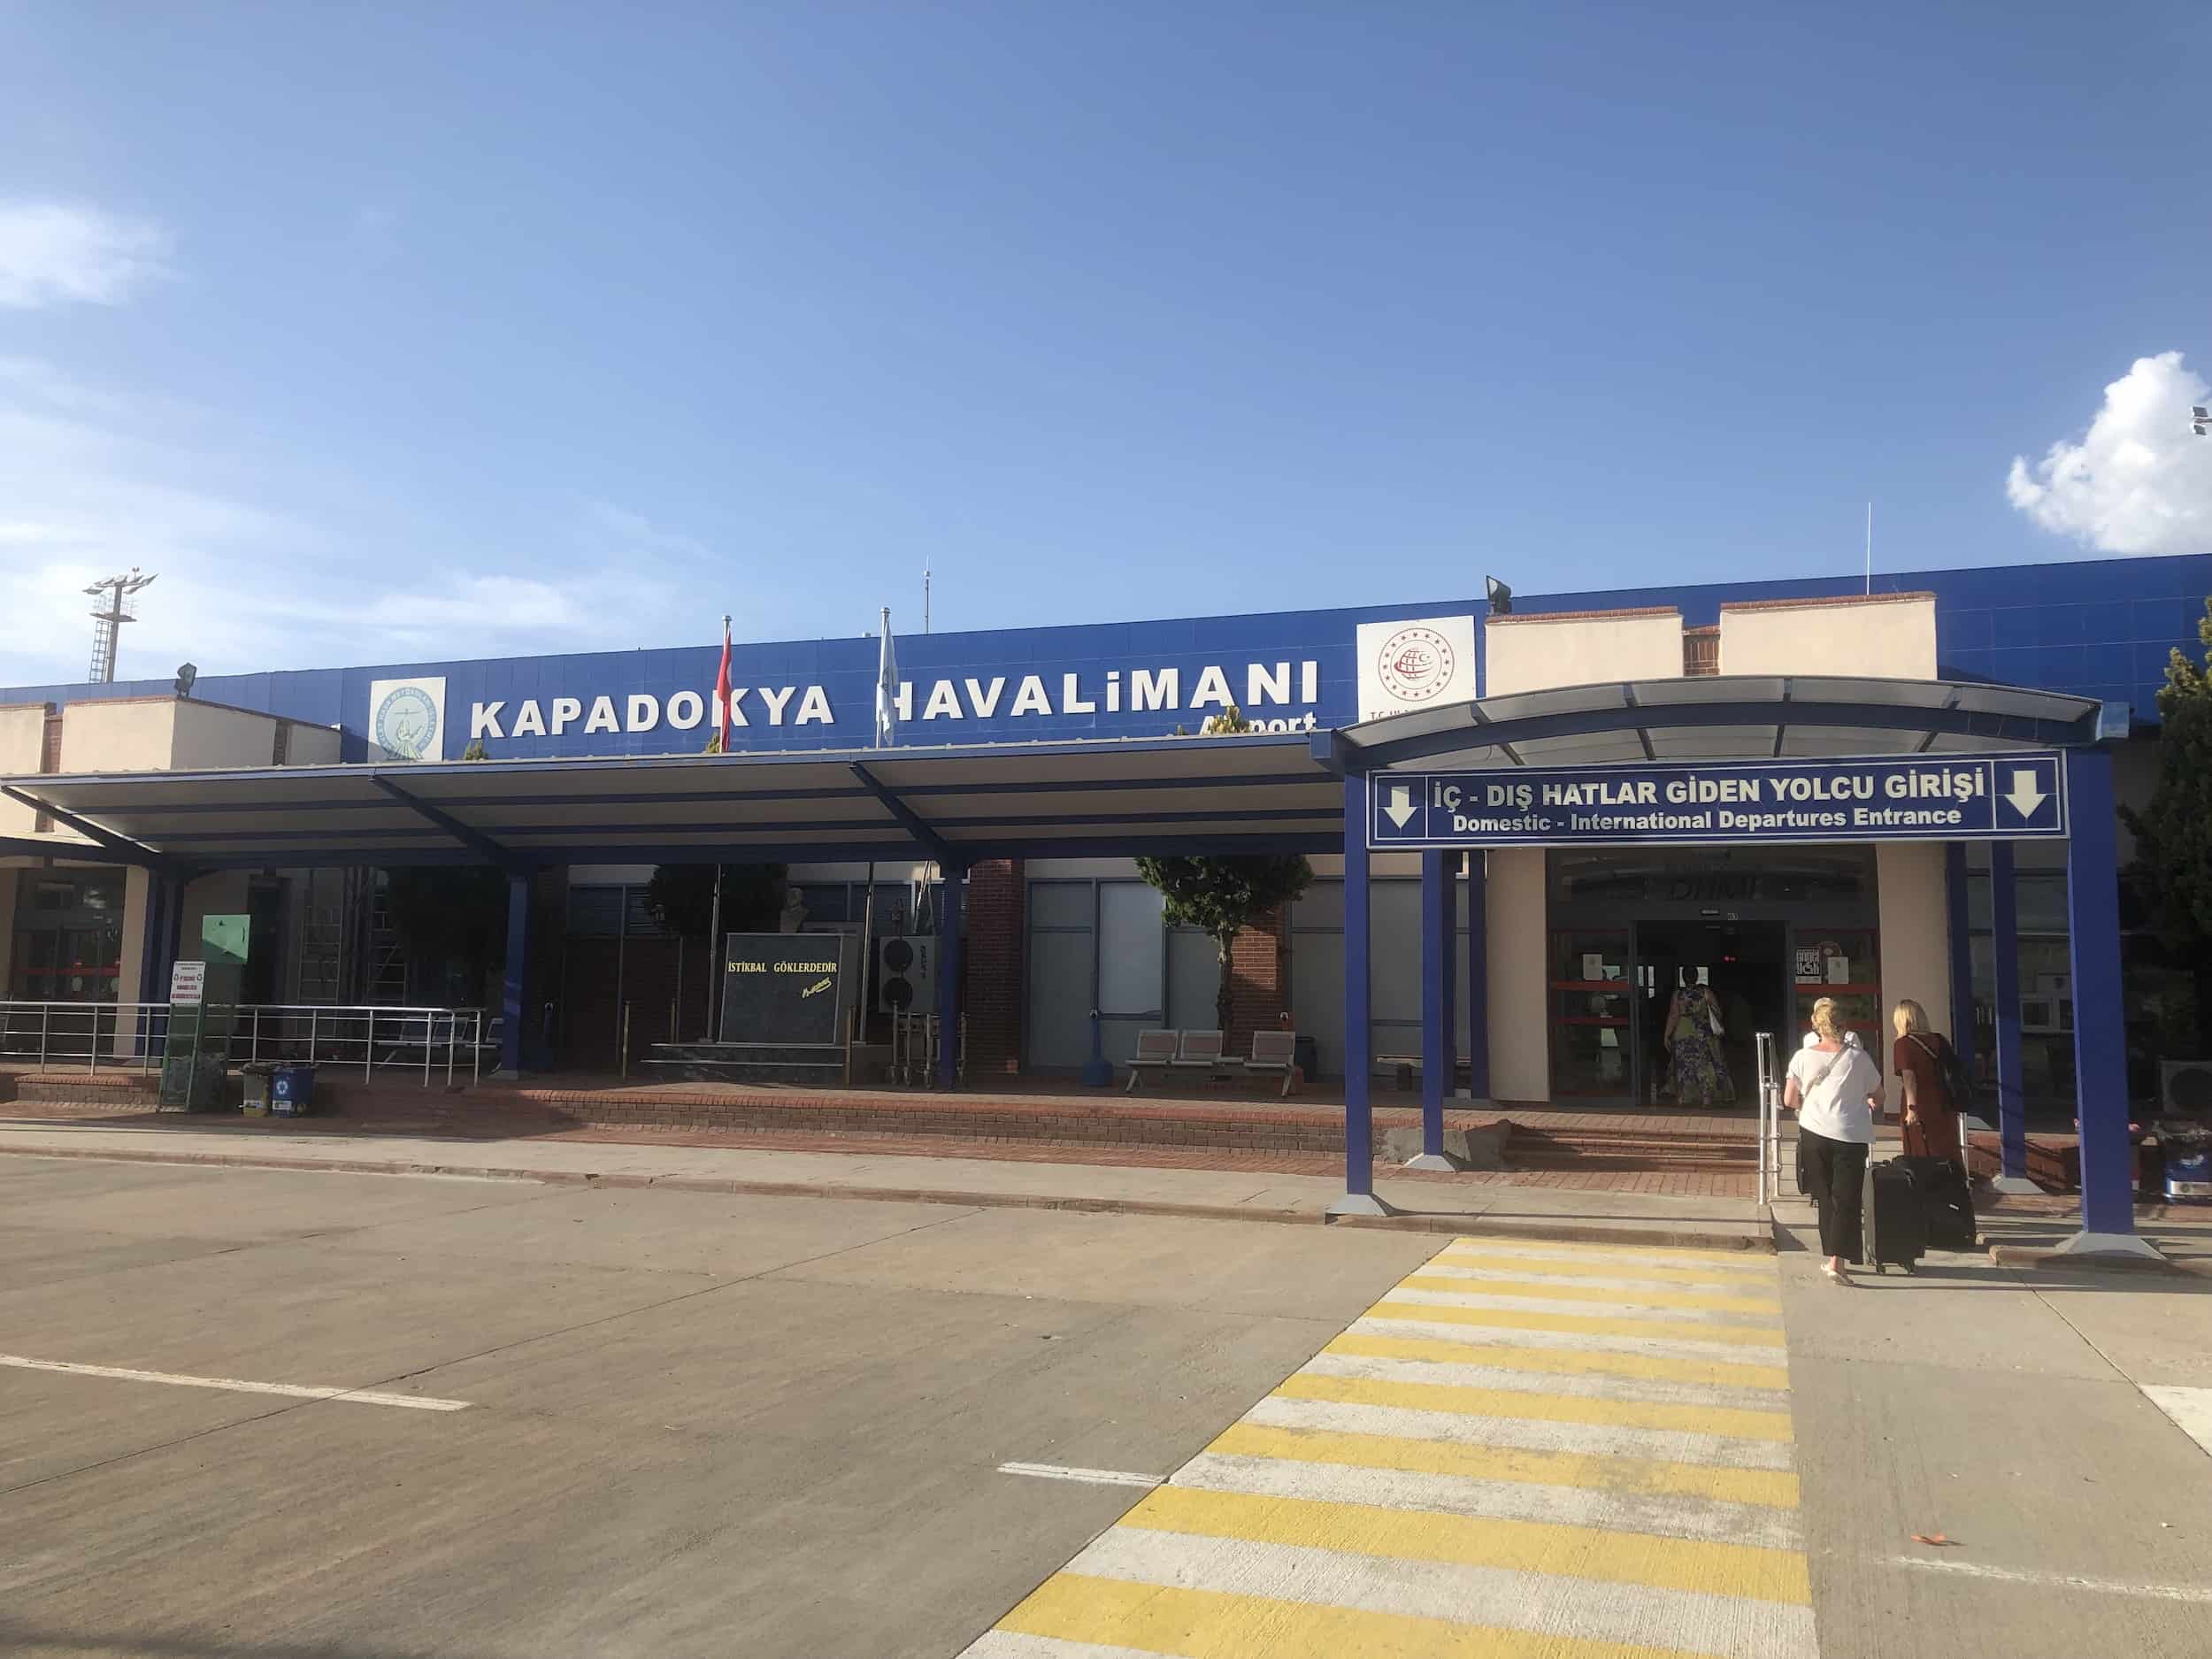 Nevşehir Kapadokya Airport in Cappadocia, Turkey